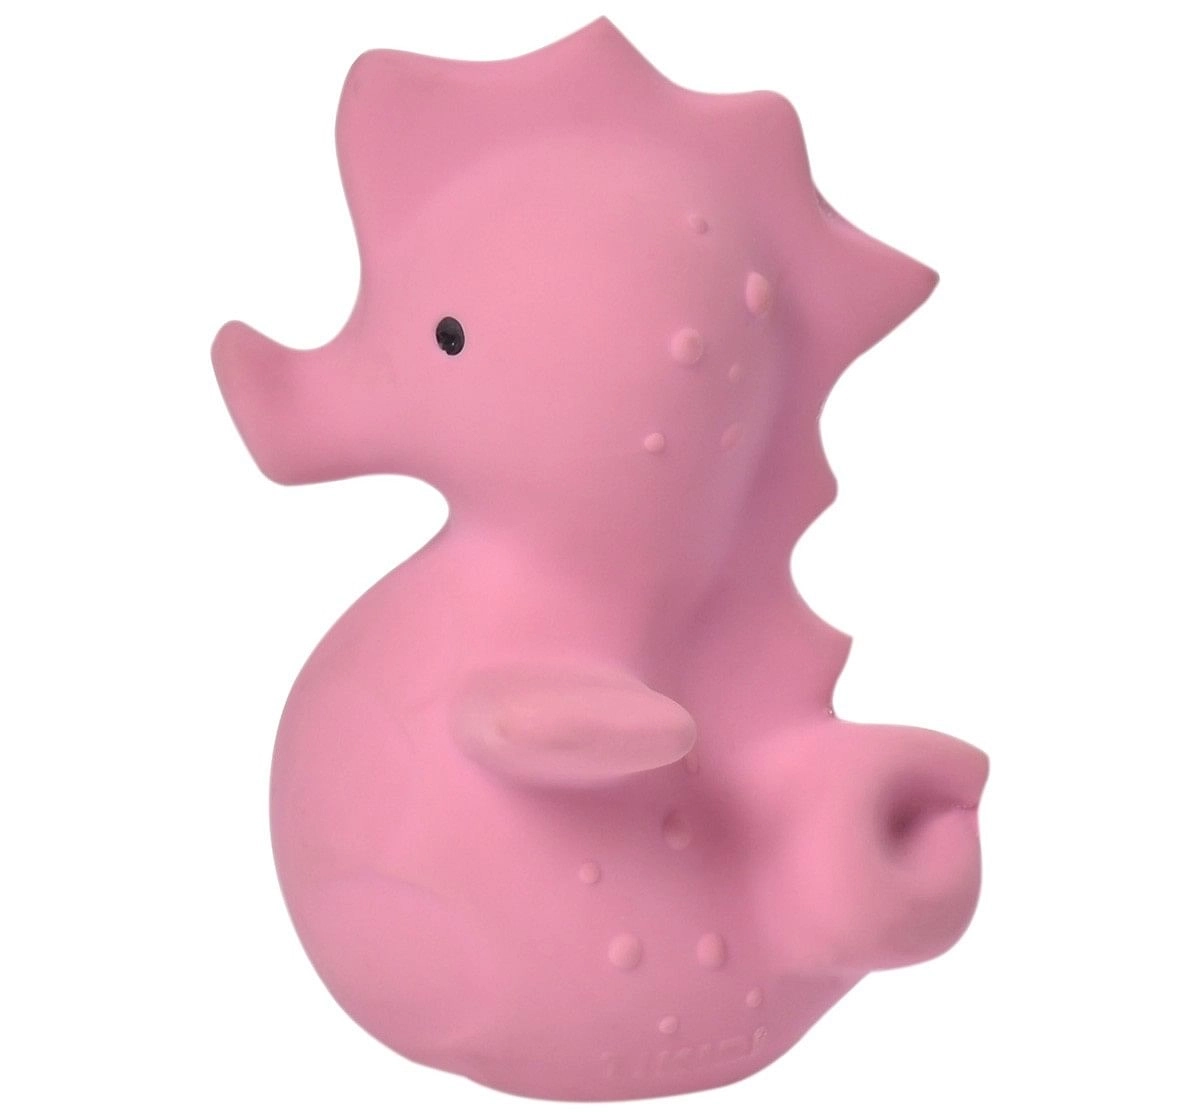 Tikiri Toys Sea Horse Natural Rubber Rattle & Bath Toy for Kids age 0M+